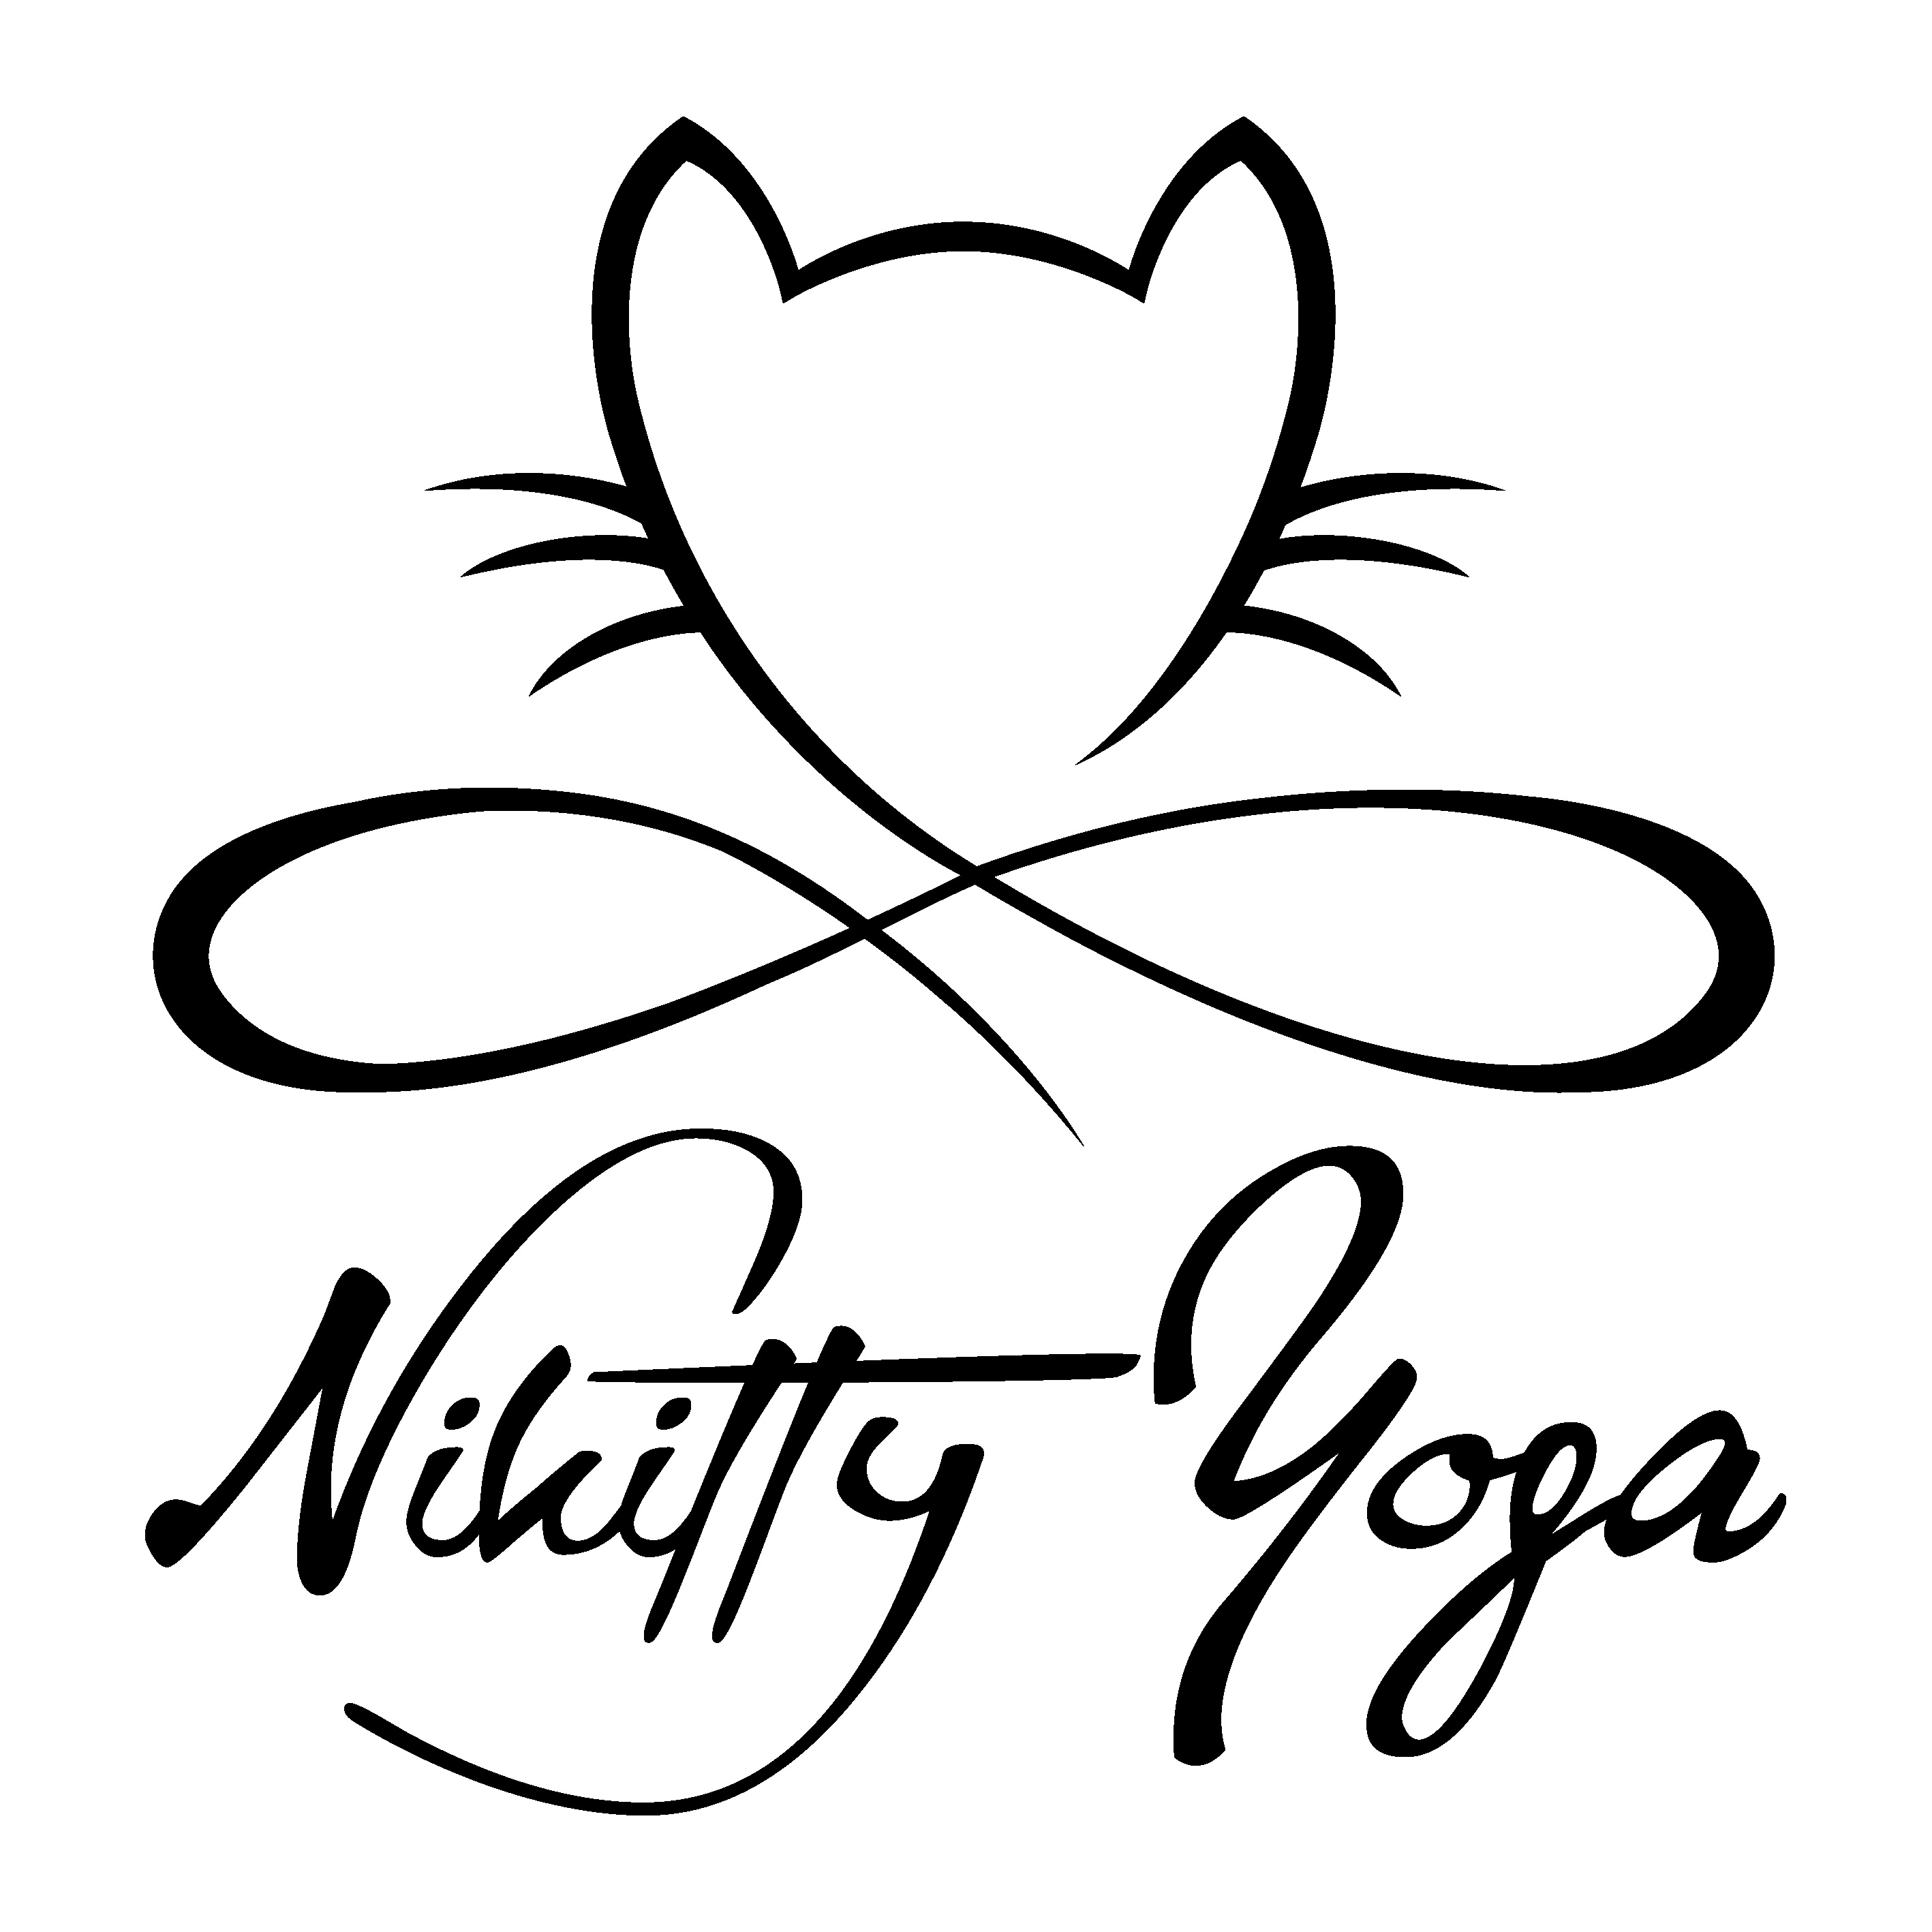 Nikitty Yoga